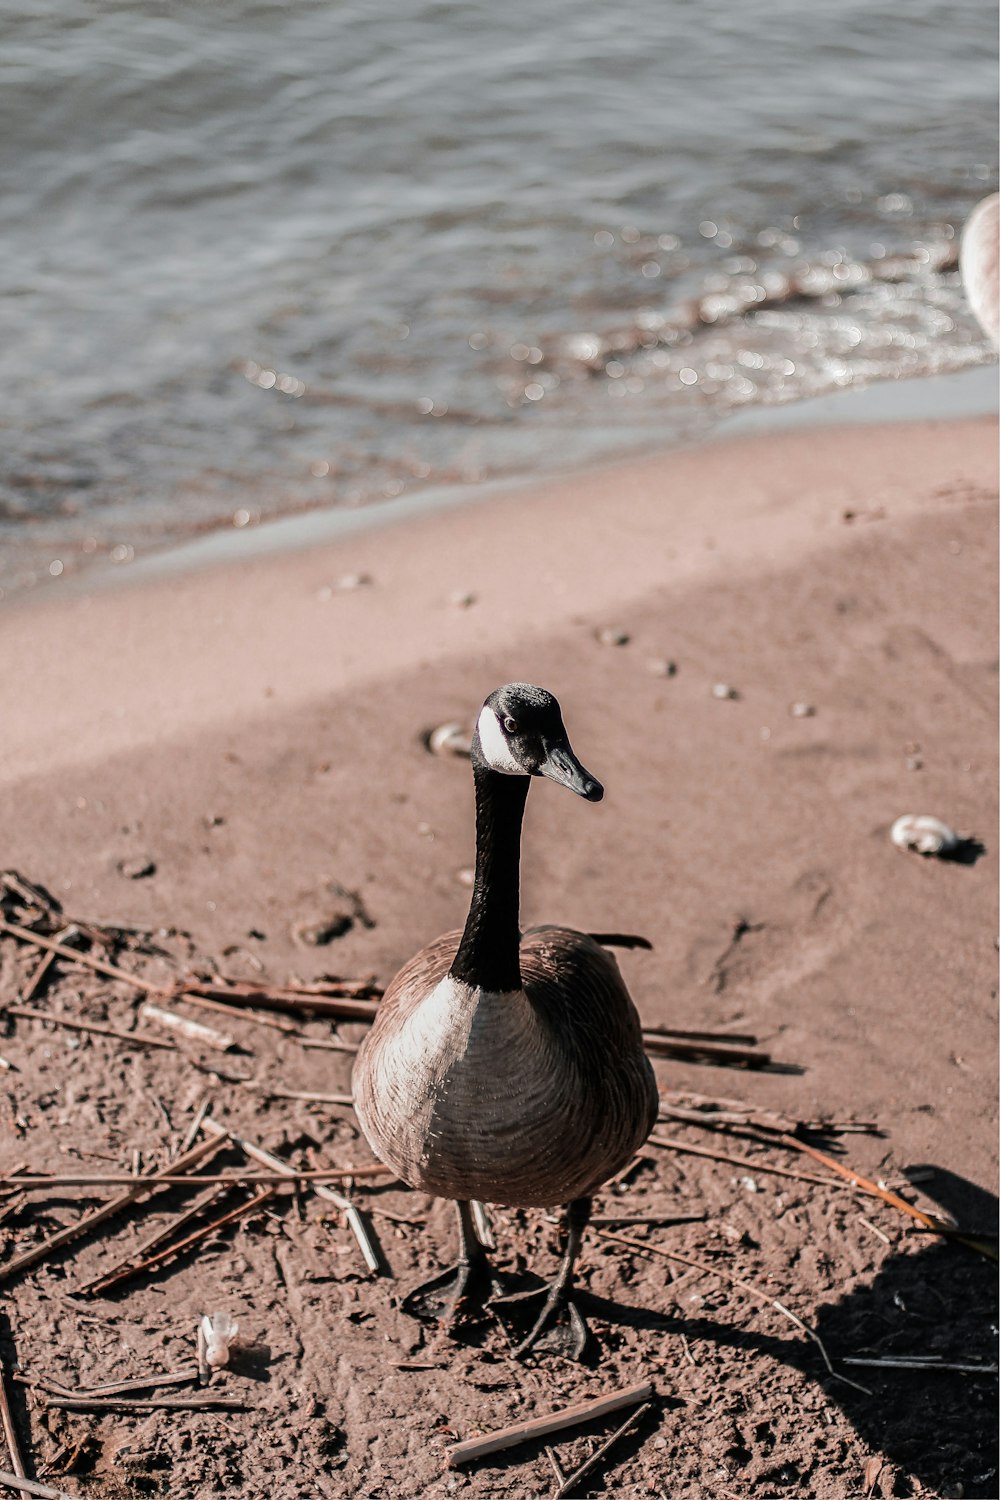 Canada goose on shore